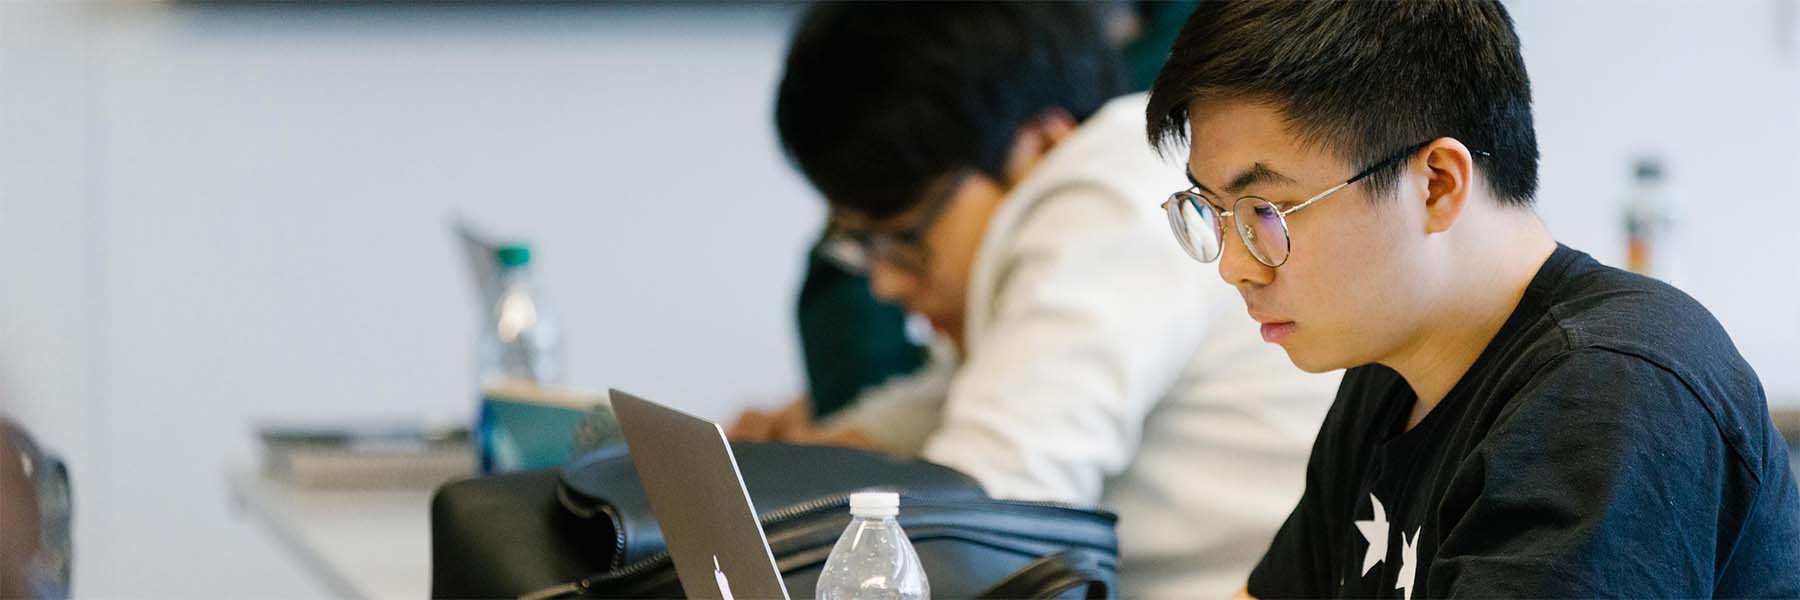 student focusing on laptop